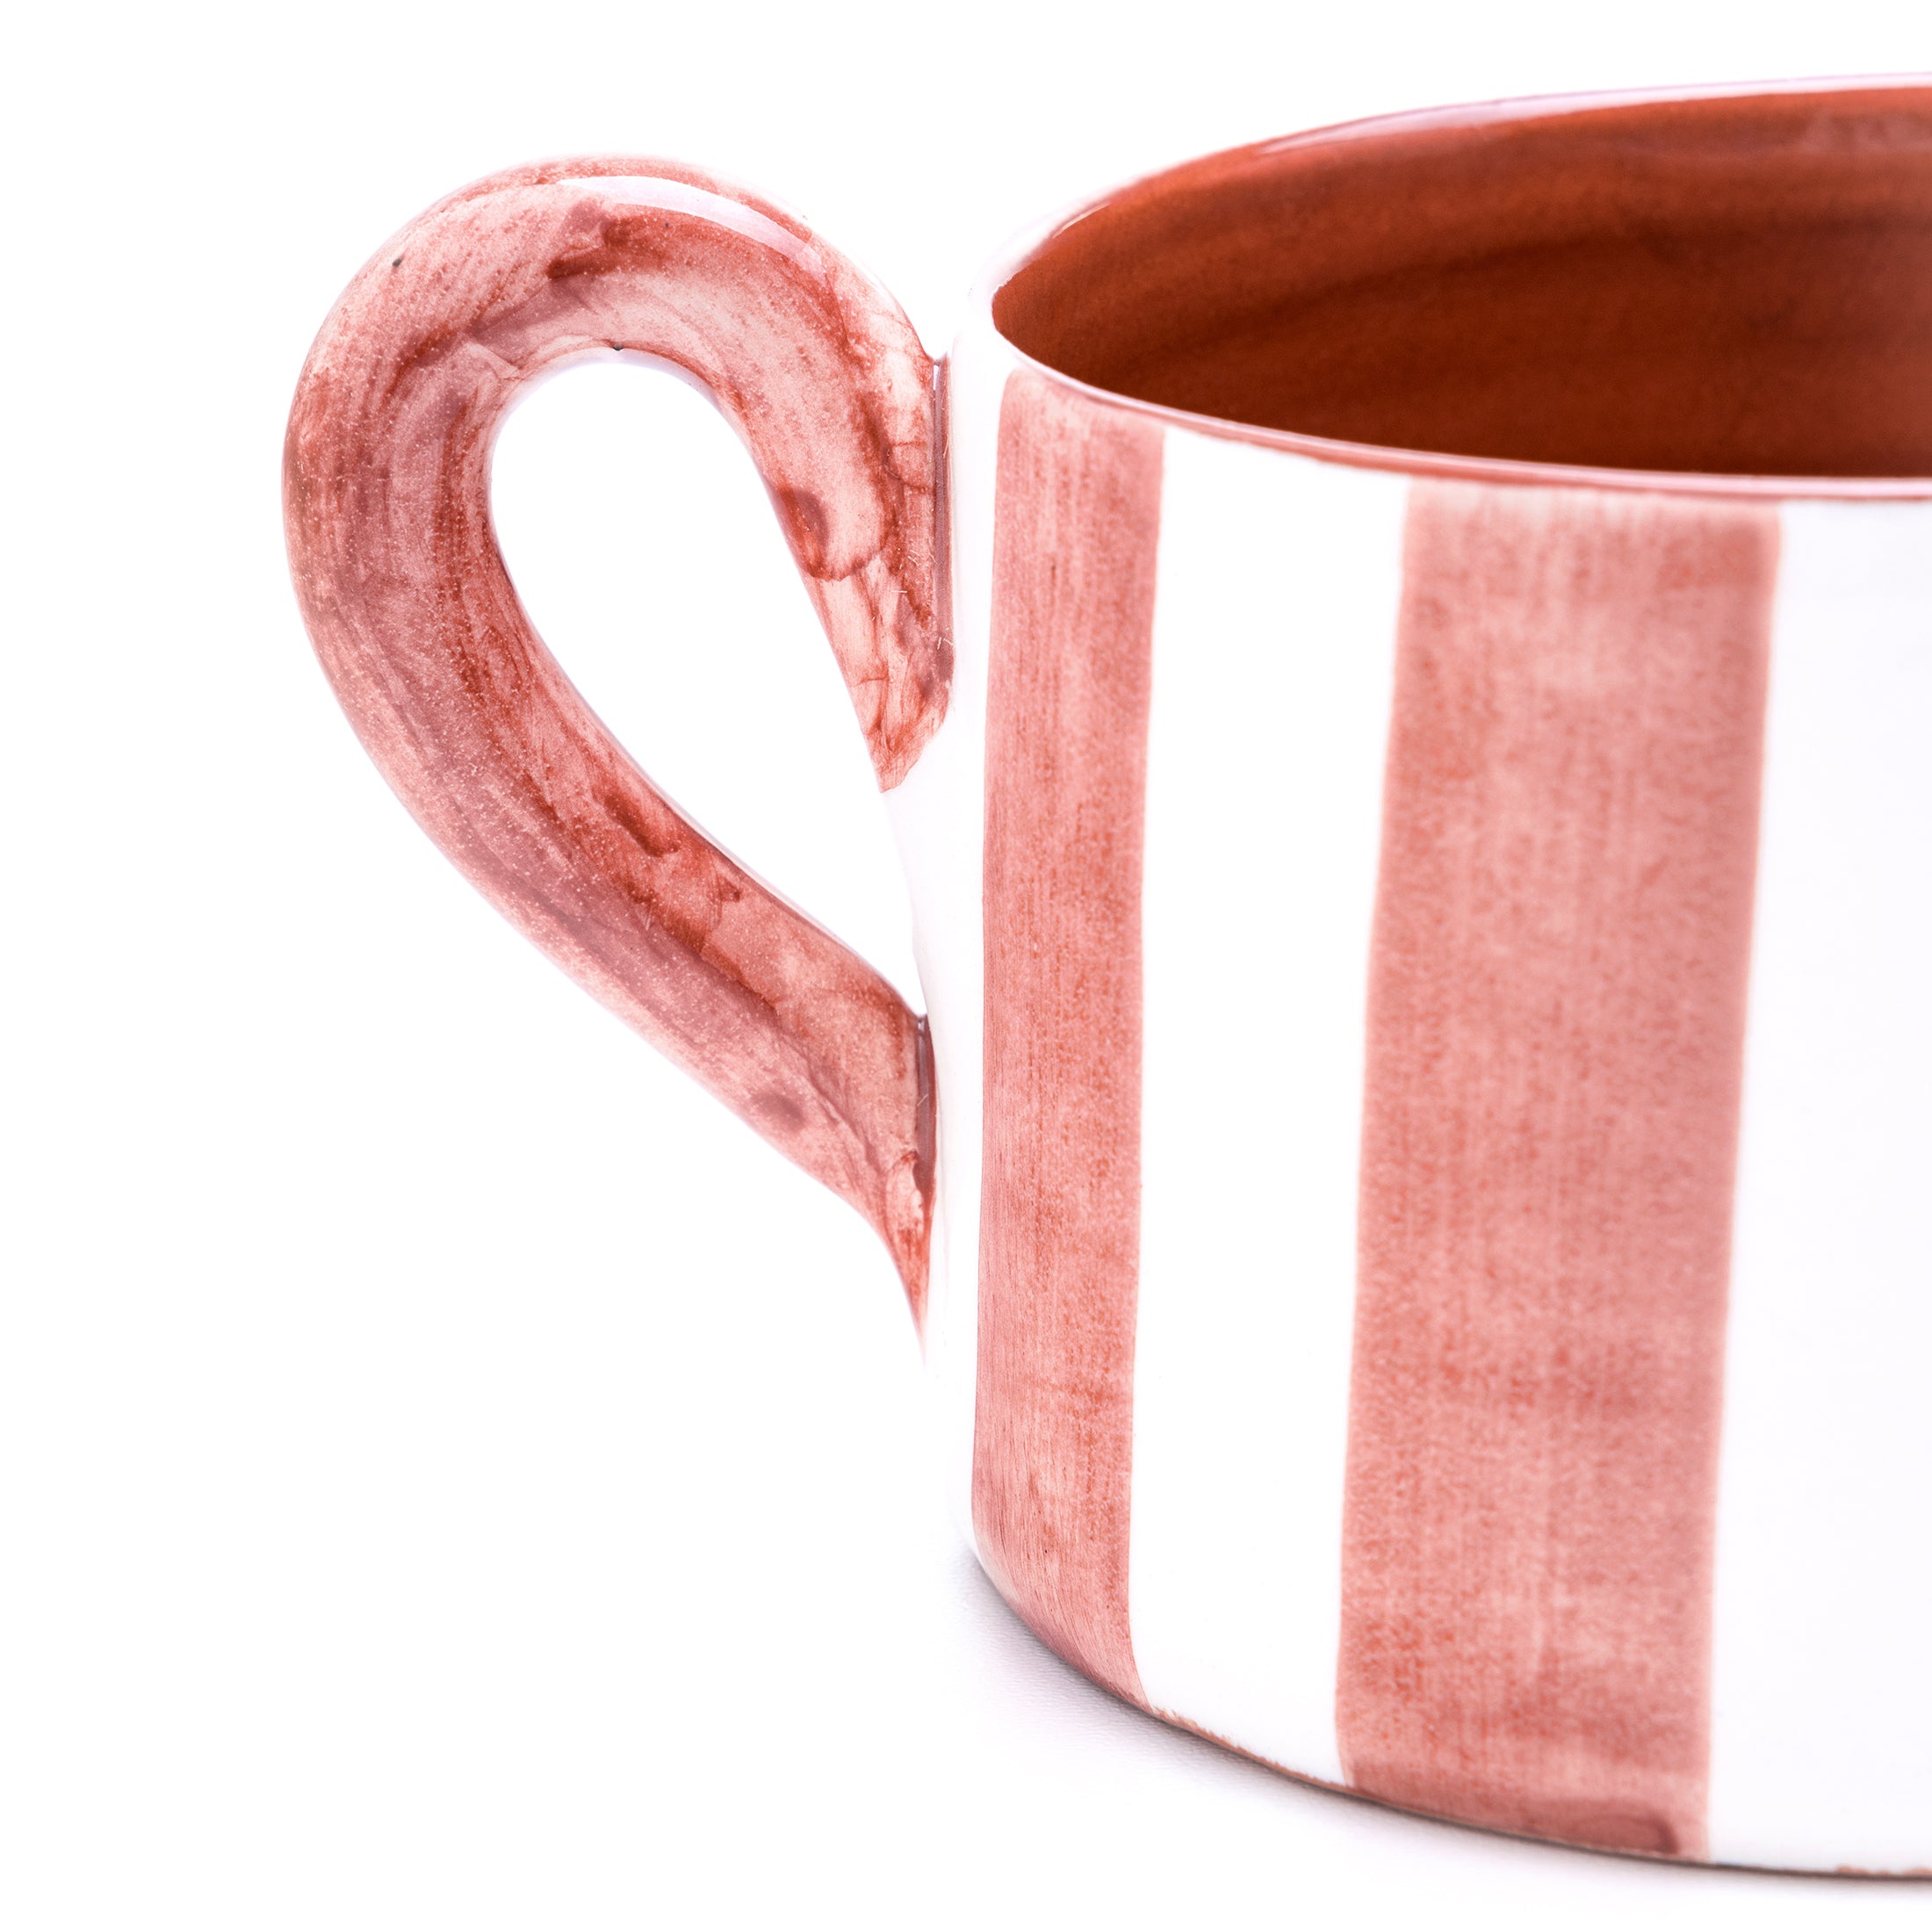 Herring & Bones - Concept Store Joyeux - Casa Cubista - Mugs - Grand mug "Bold"